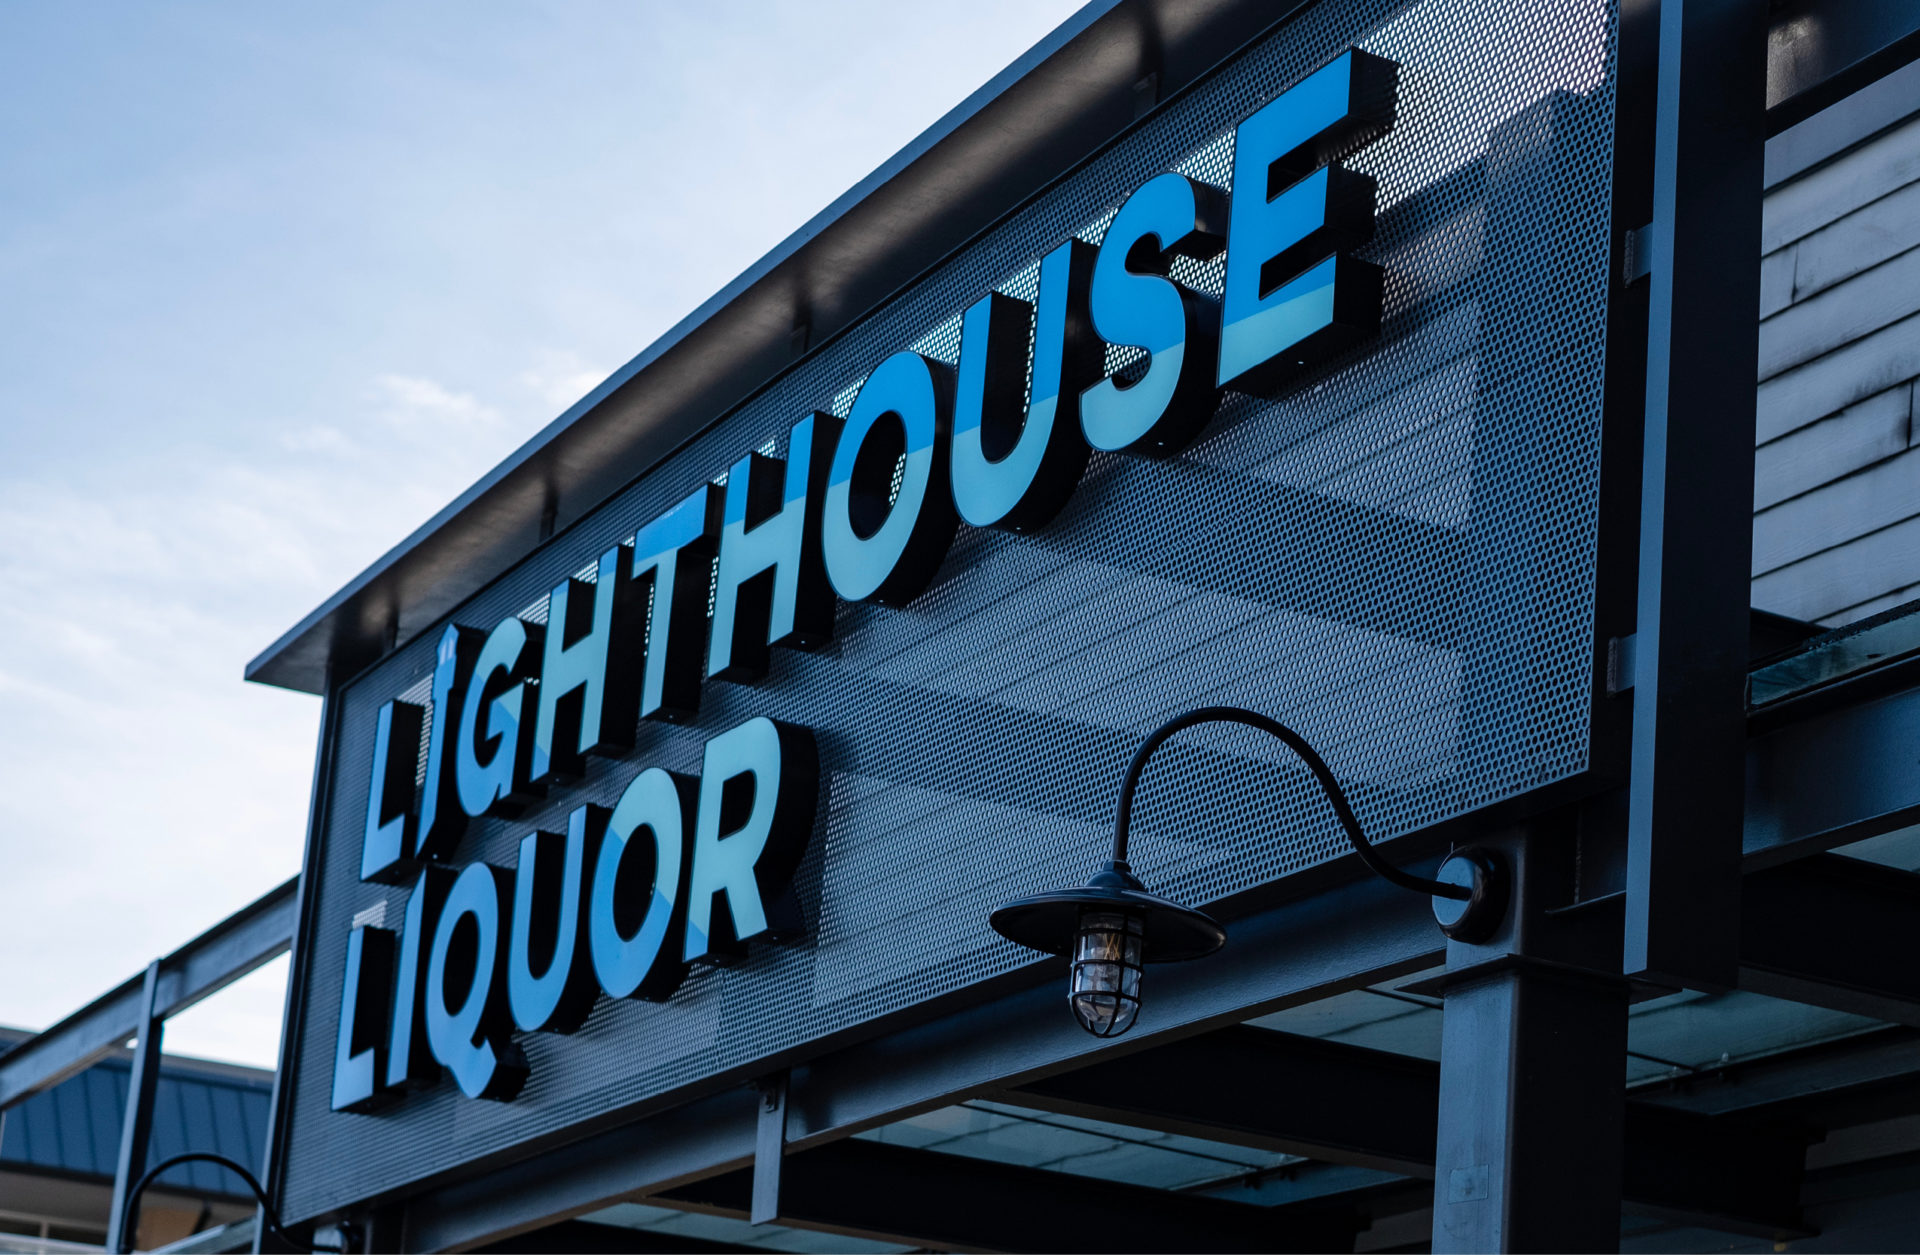 Lighthouse Liquor custom signage for logo